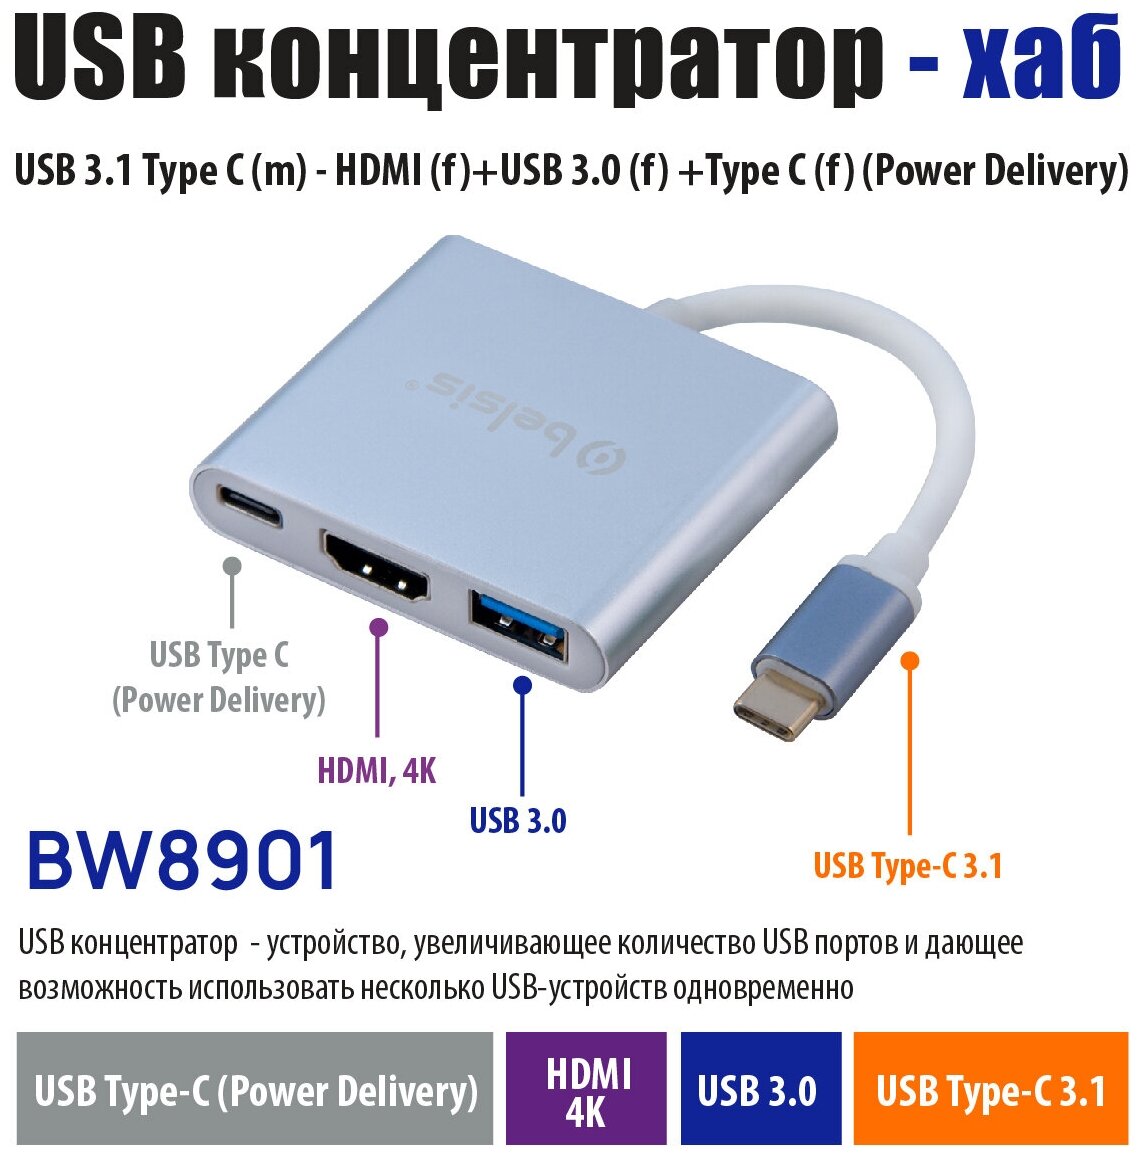 USB Hub Type C 3.1 - HDMI +USB 3.0 +Type C (Power Delivery), Belsis, Тайп си Концентратор 3 в 1 /BW8901